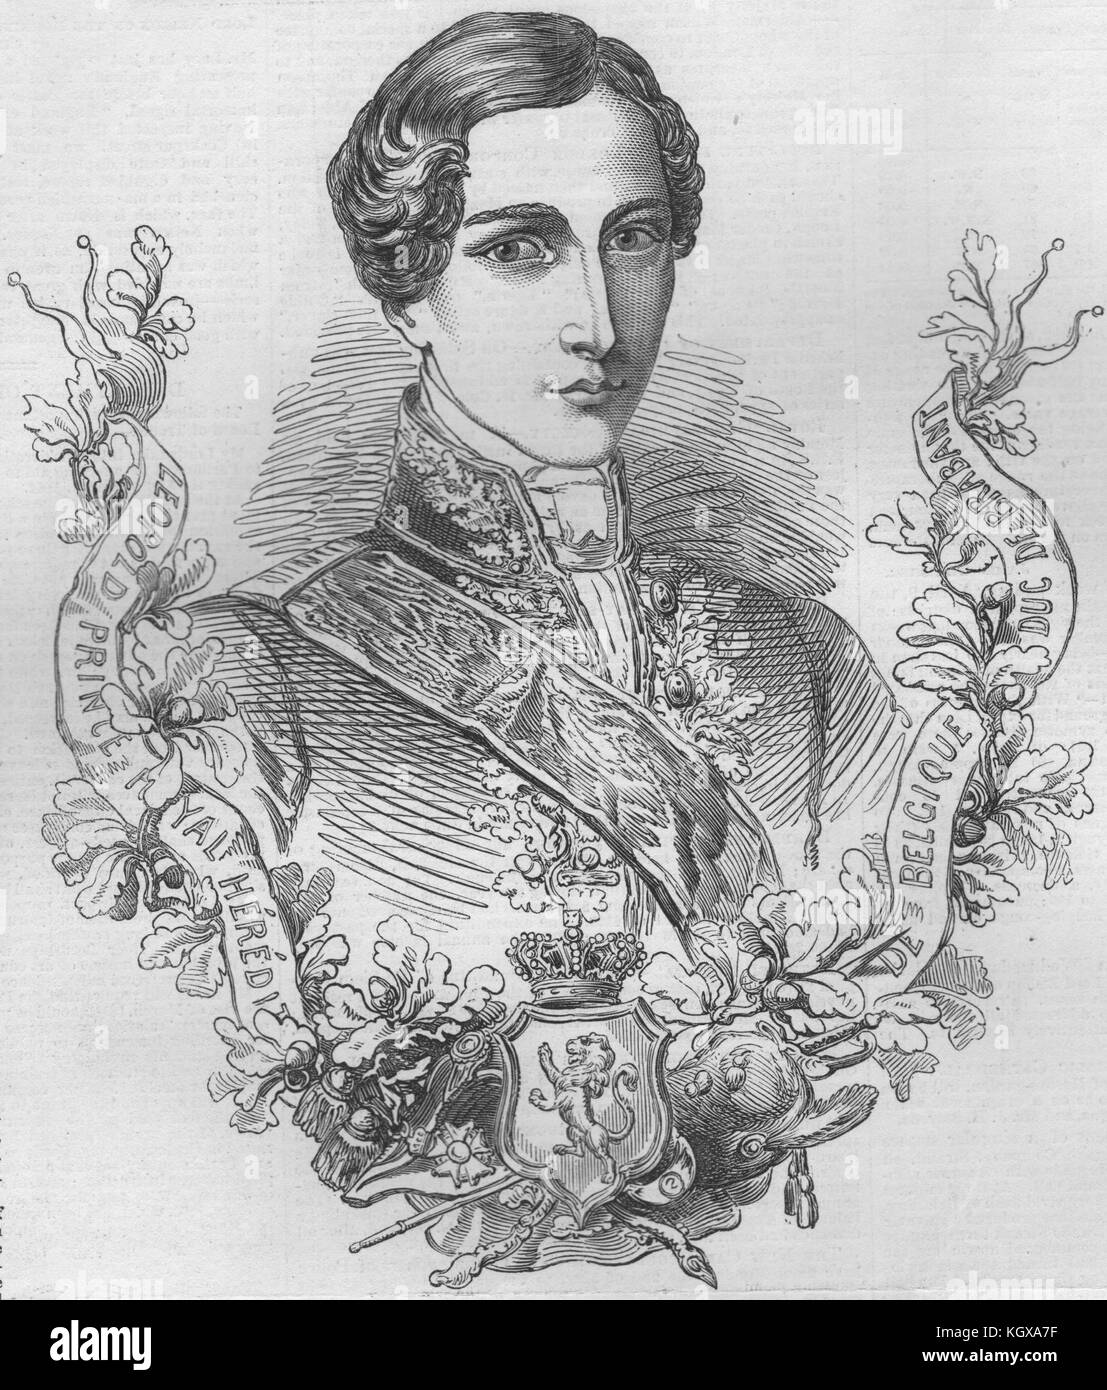 His Royal Highness the Duke de Brabant. Belgium 1853. The Illustrated London News Stock Photo